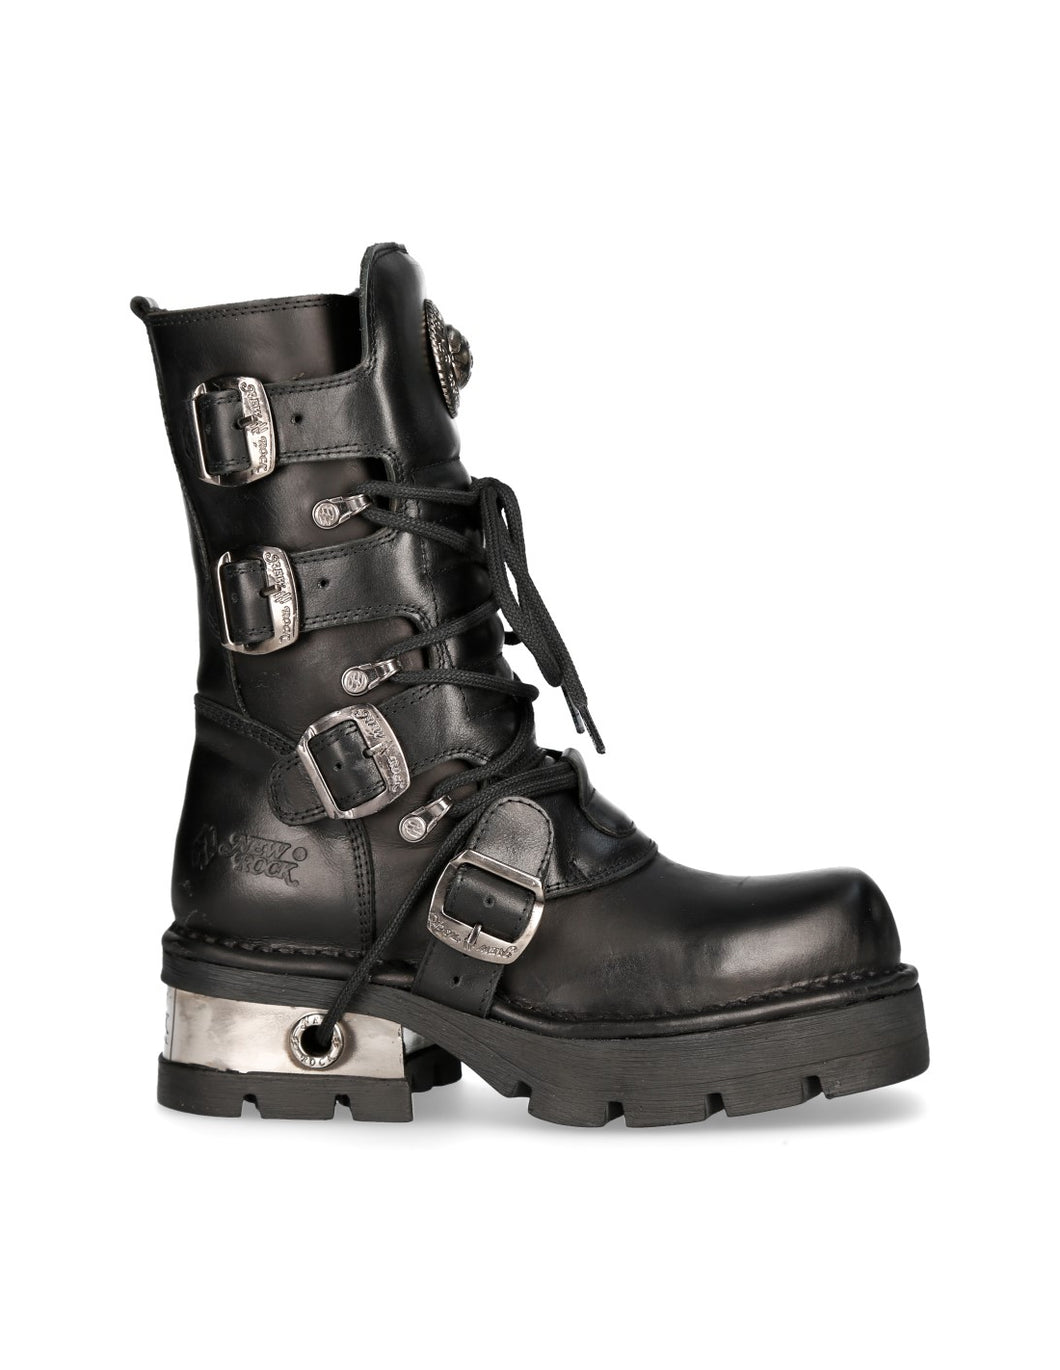 New Rock Schuhe Boots M.373-S1 Stiefel Bikerstiefel Gothic Unisex Classic Echtleder